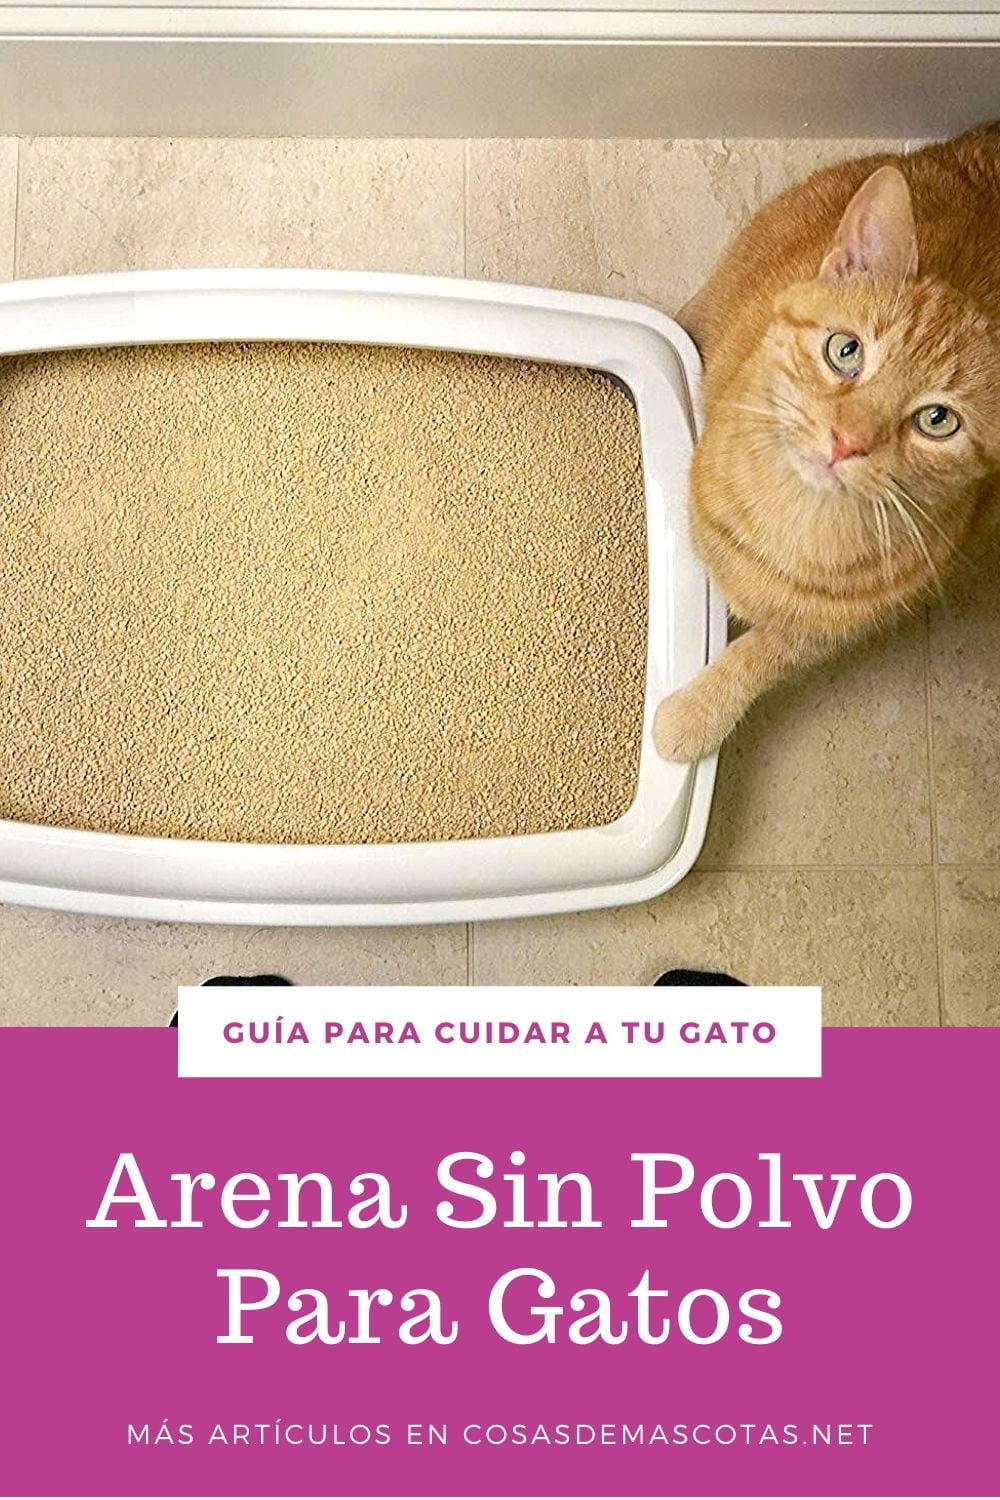 Arena sin polvo para gatos